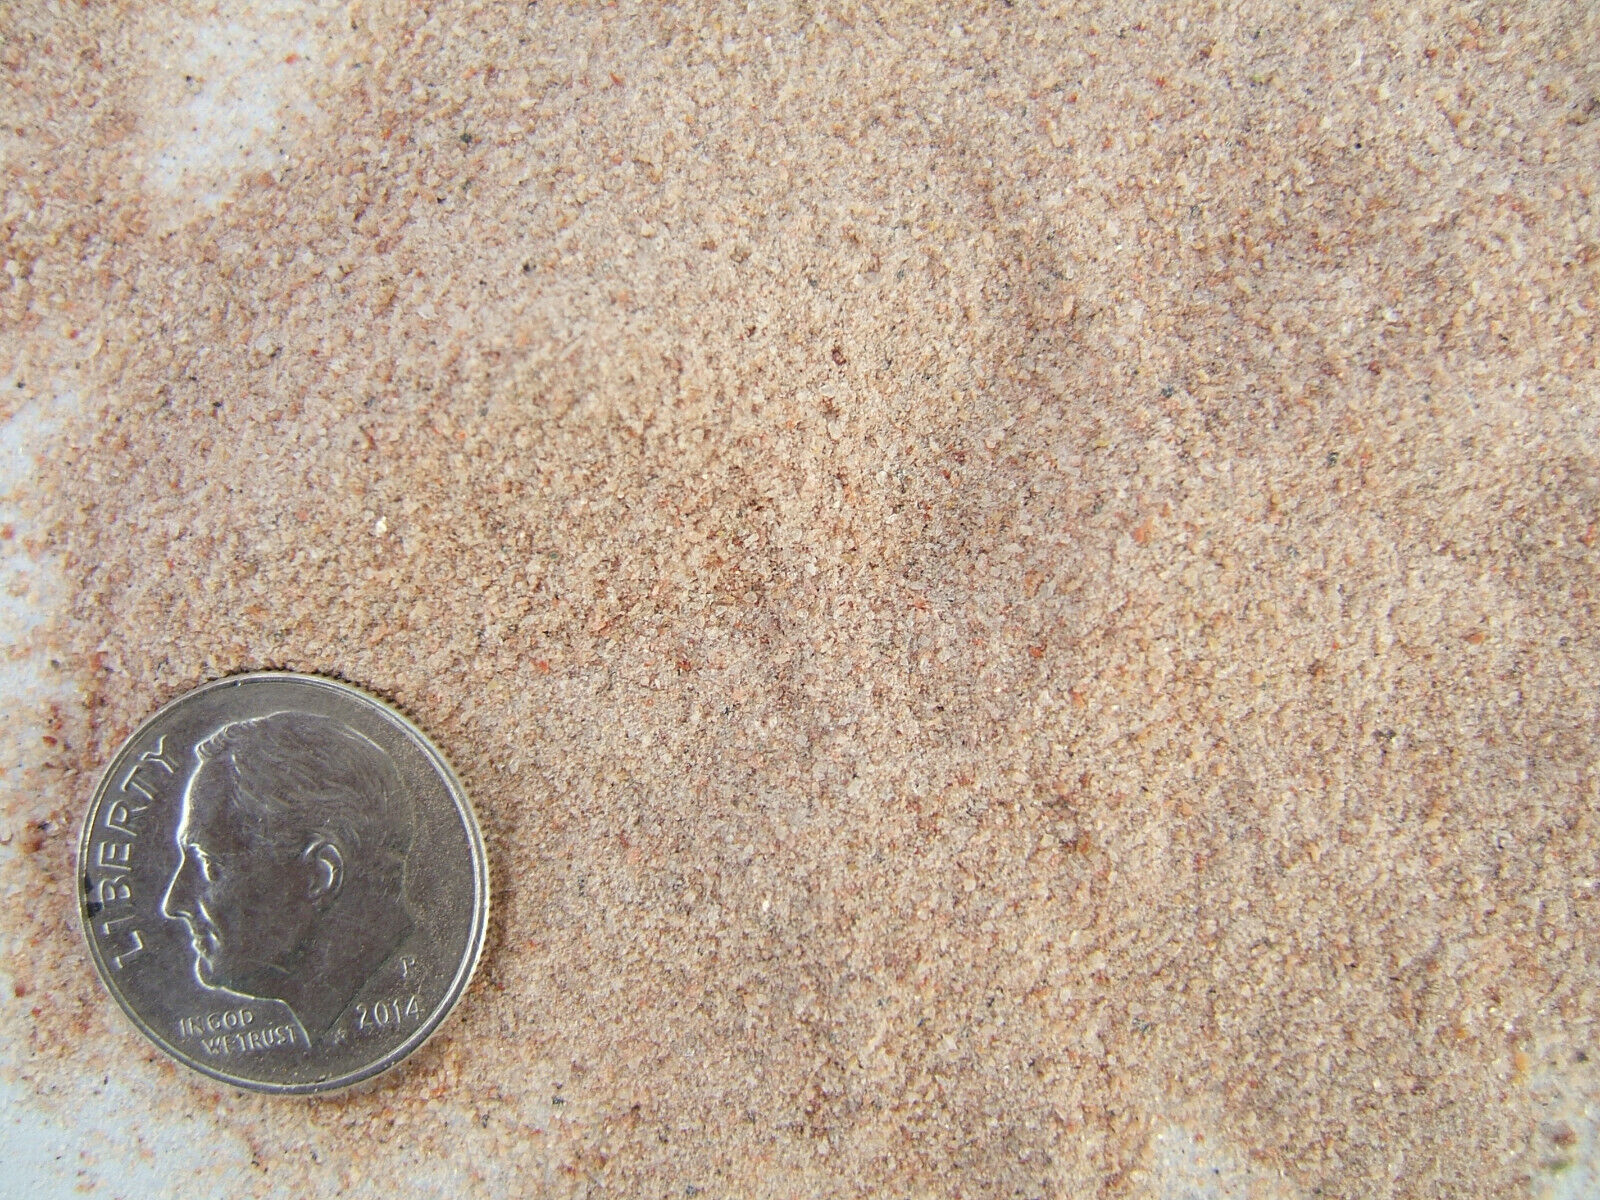 1 oz. red granite fine crushed inlay powder / stone / material